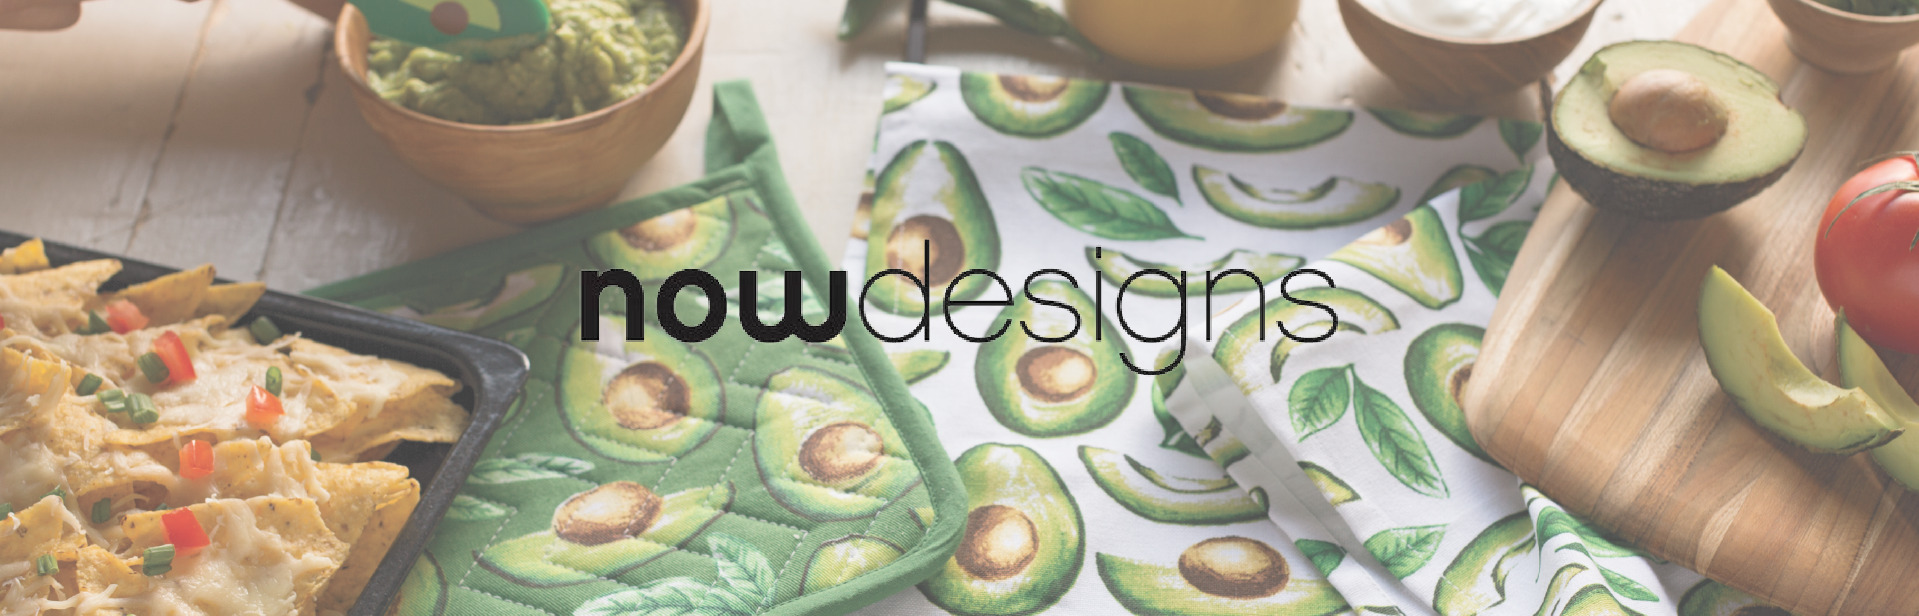 Now Designs Kitchen Textile Products